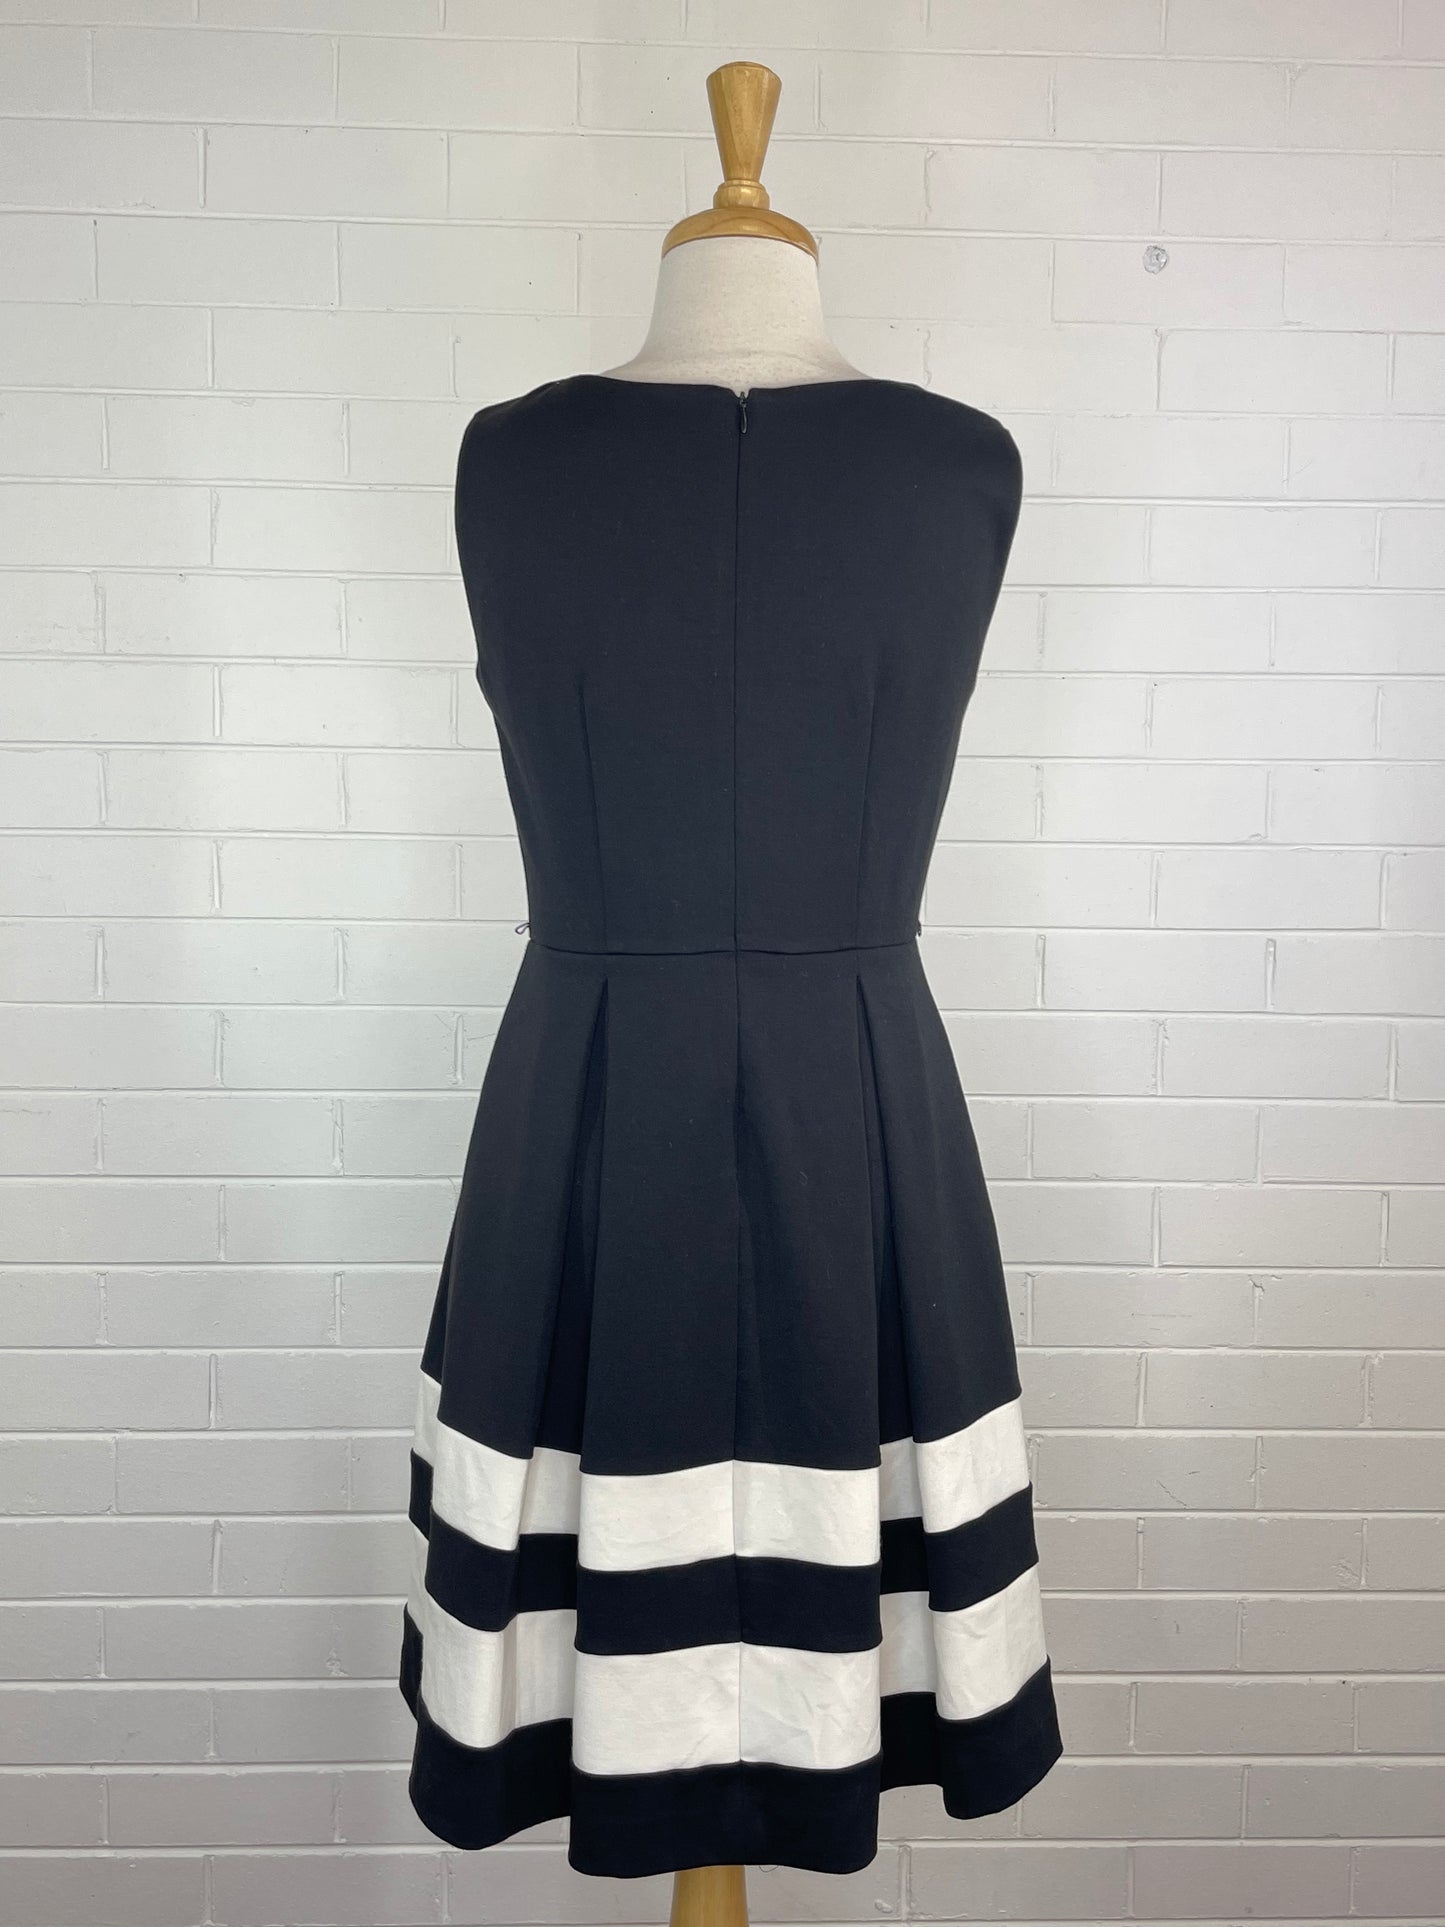 Calvin Klein Size 2 Black Dress